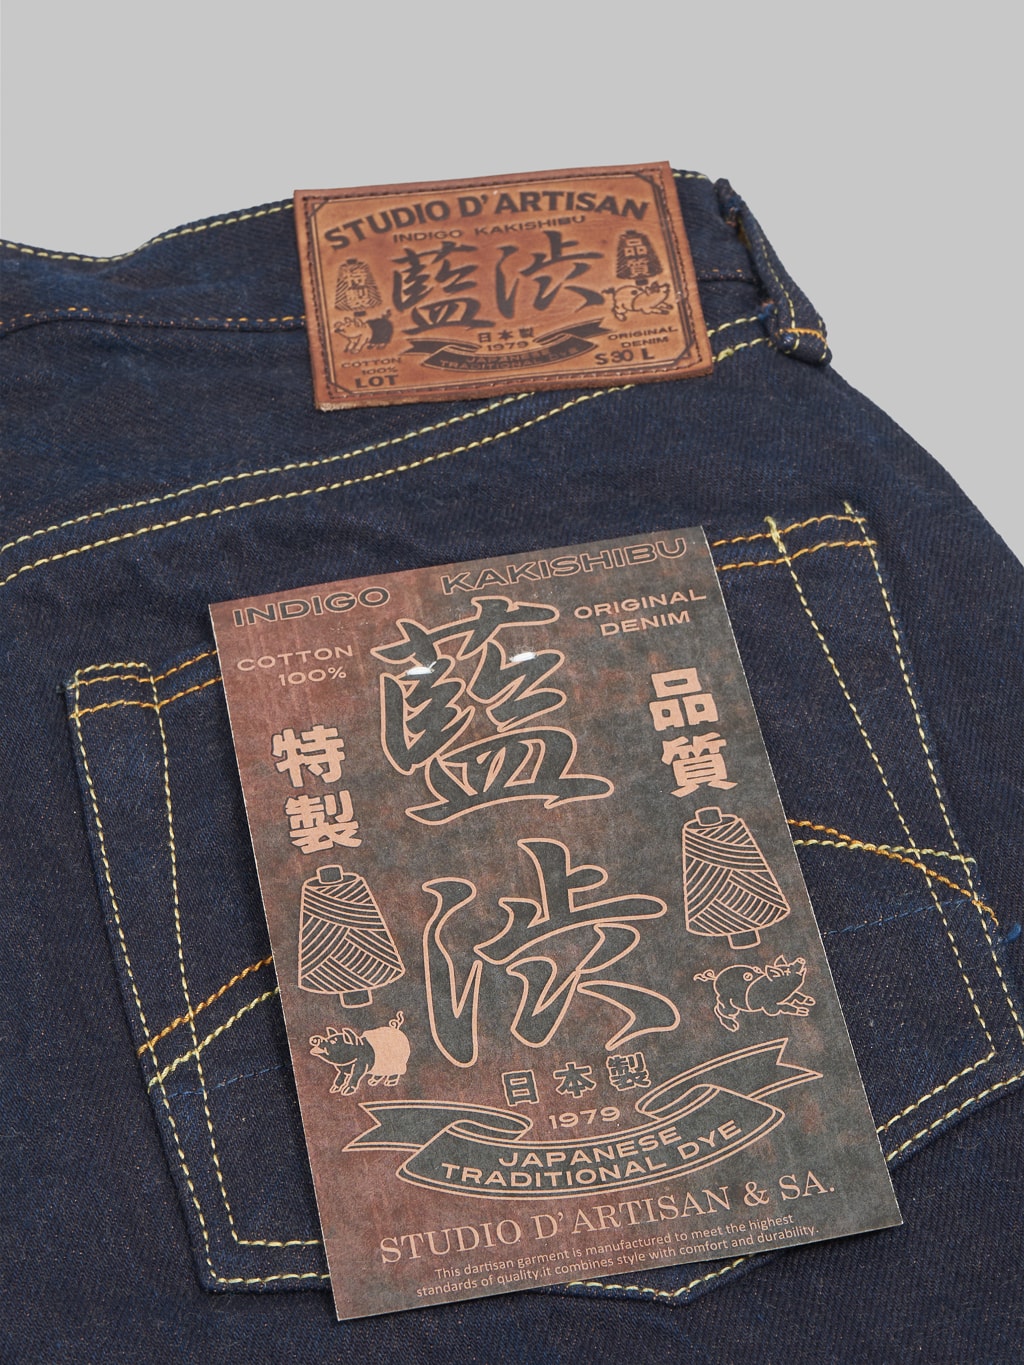 Studio Dartisan D1879 Aishibuzome Natural Indigo x Kakishibu Jeans pocket flasher